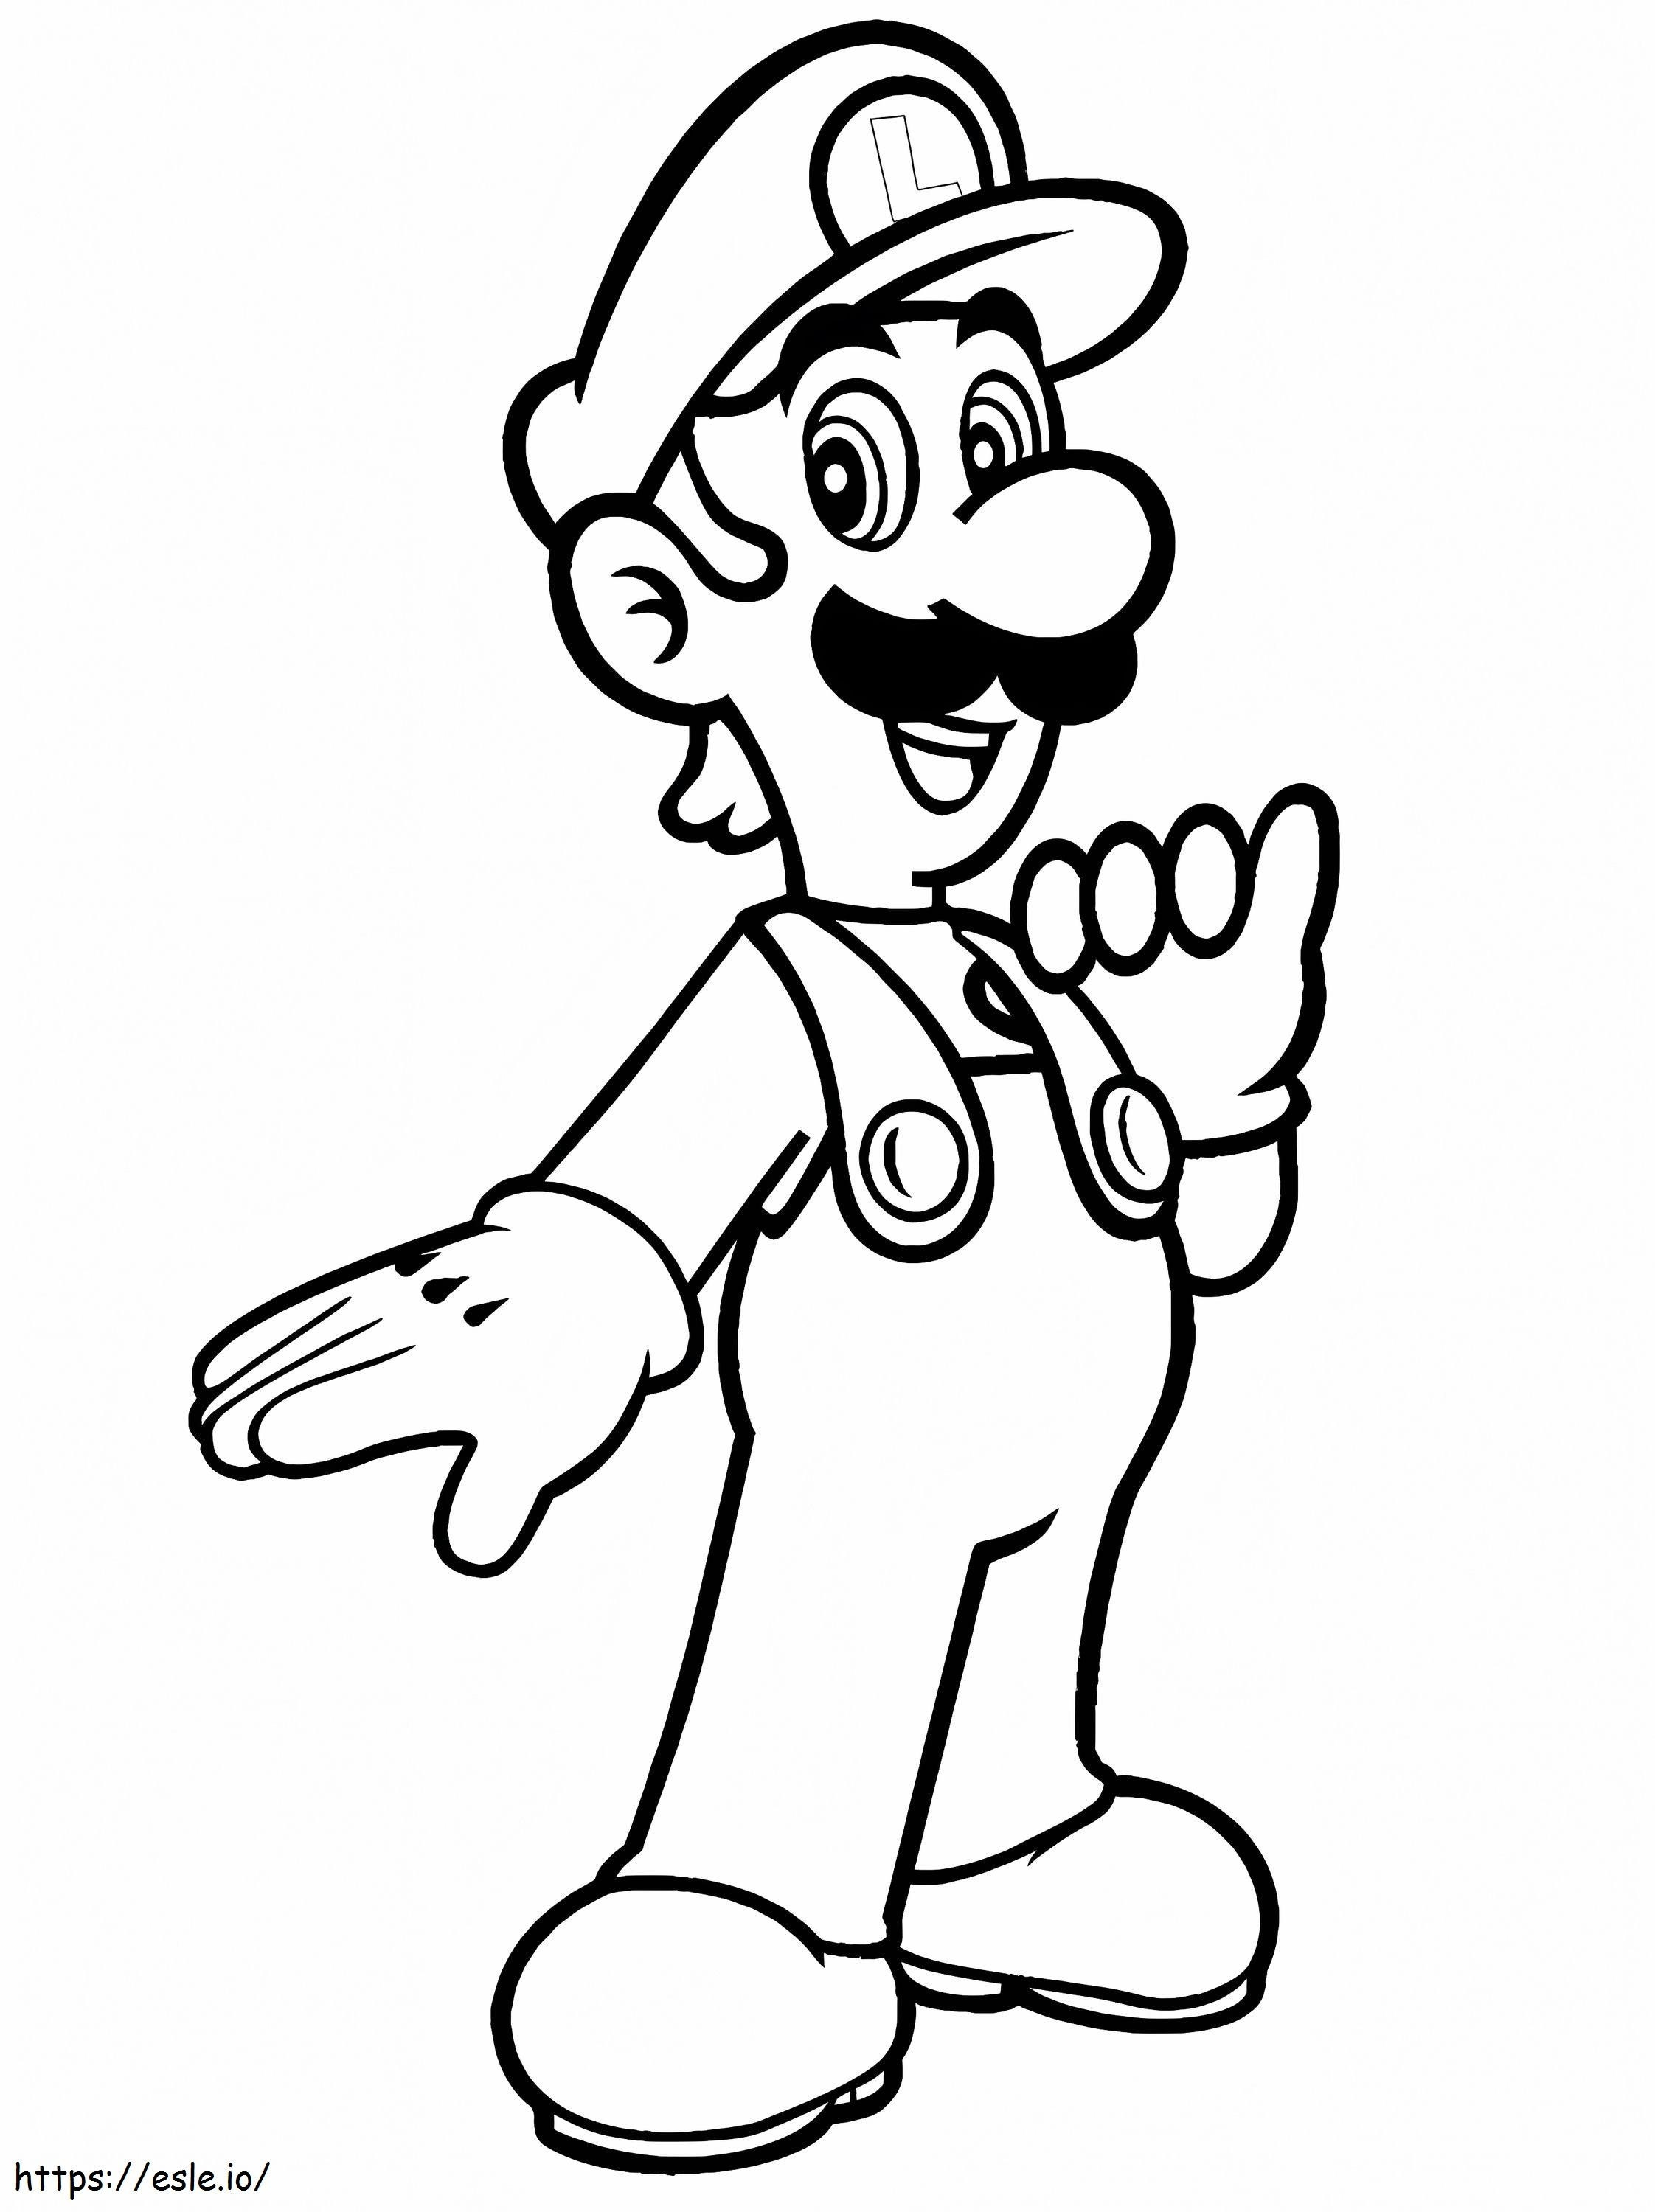 Coloriage Luigi De Super Mario 1 766X1024 à imprimer dessin